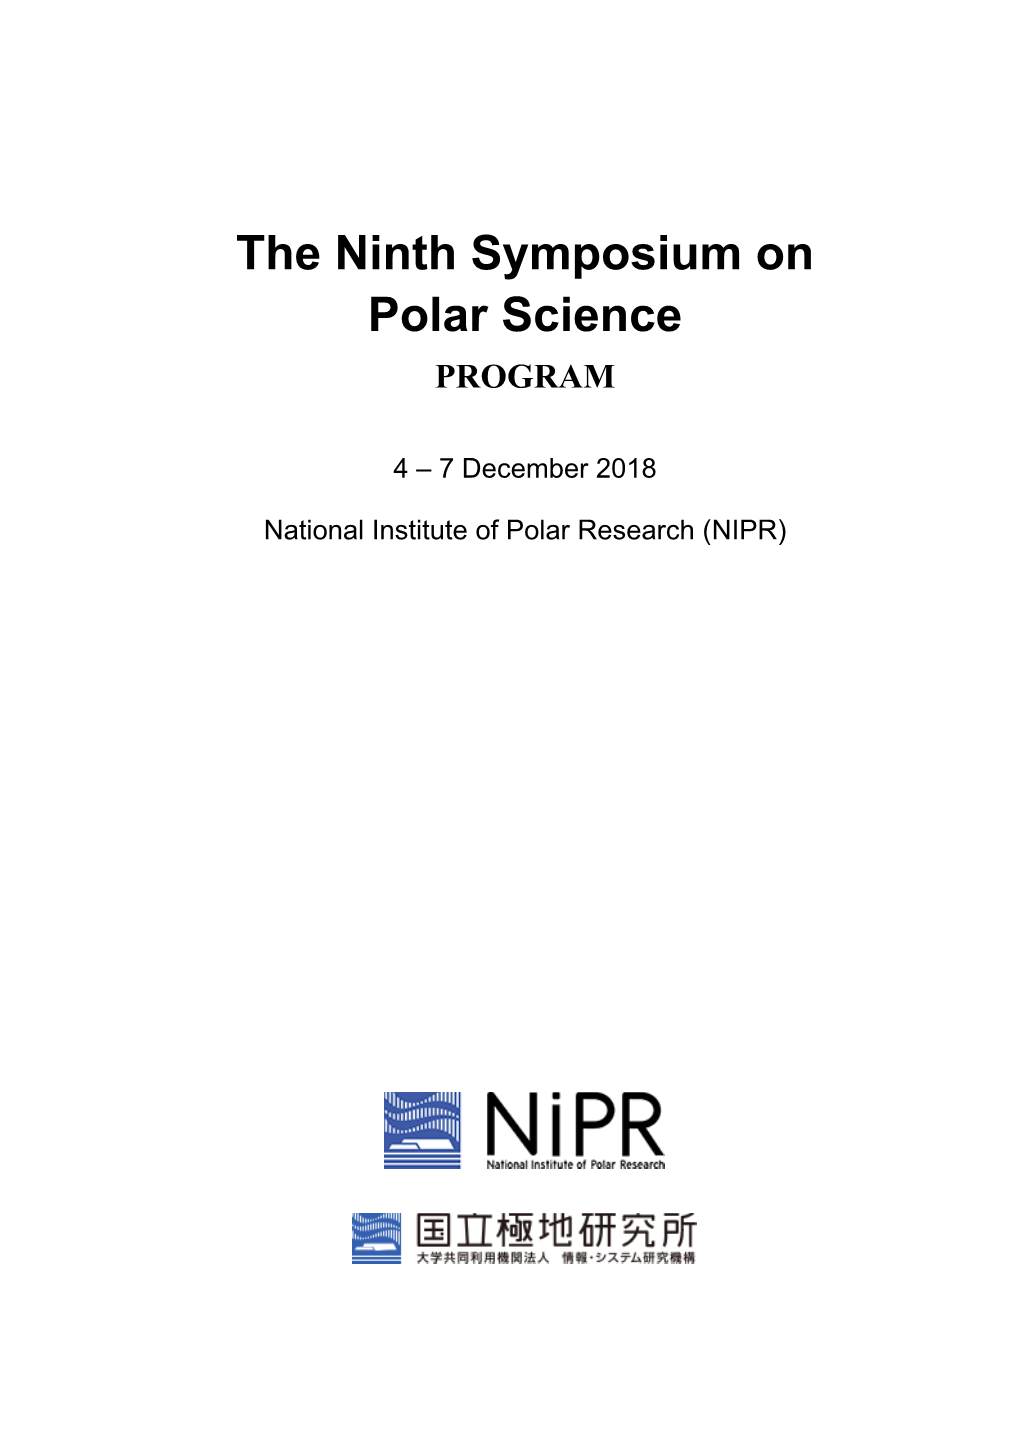 The Ninth Symposium on Polar Science PROGRAM